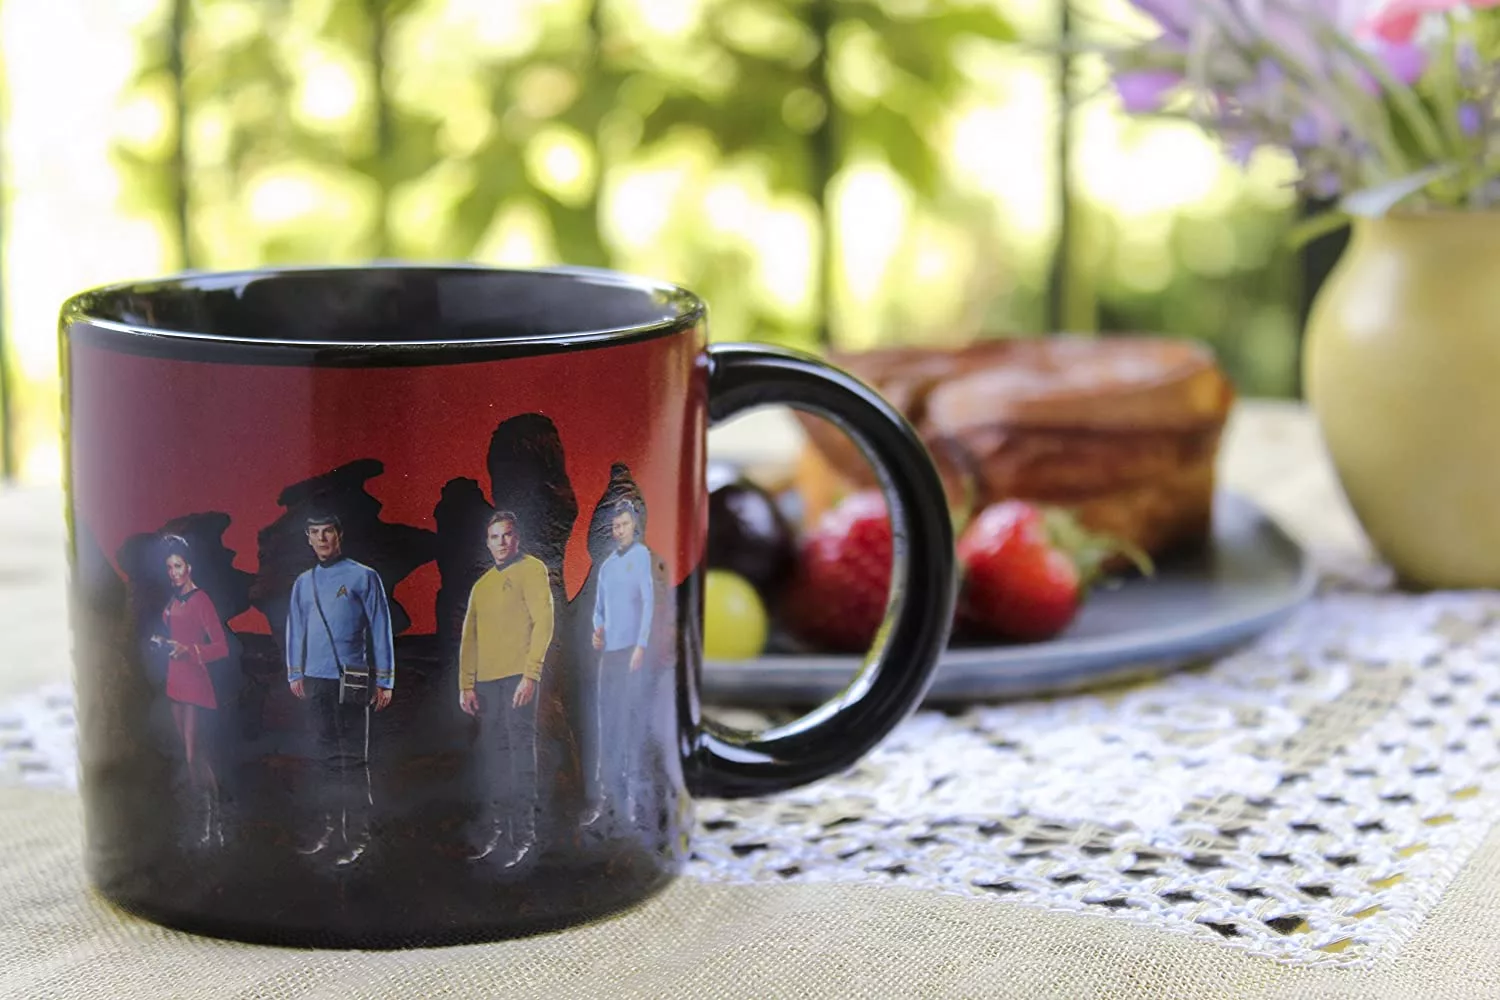 Star Trek Heat Change Coffee Mug Sitting on Table